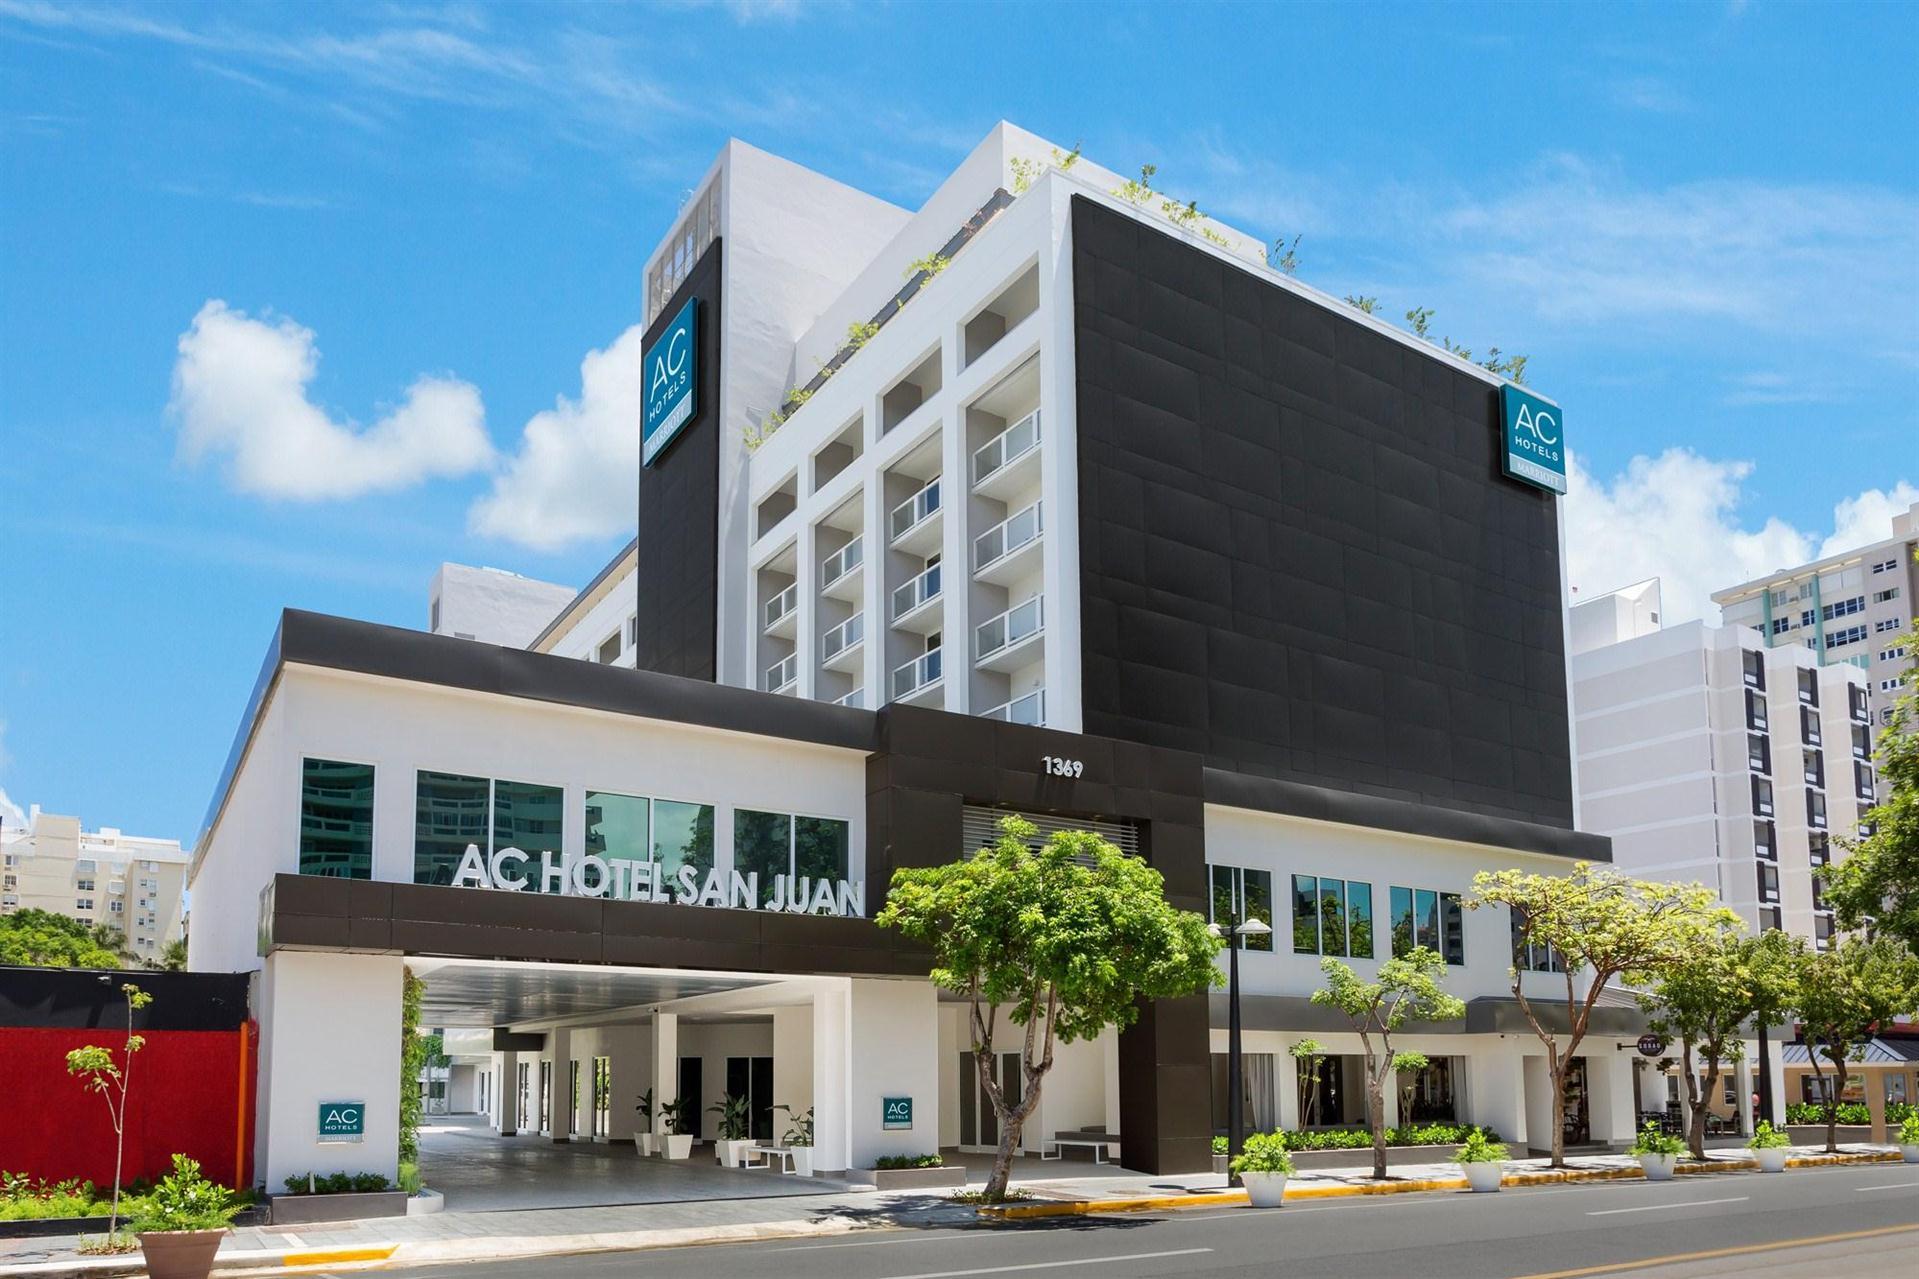 AC Hotel San Juan Condado in San Juan, PR